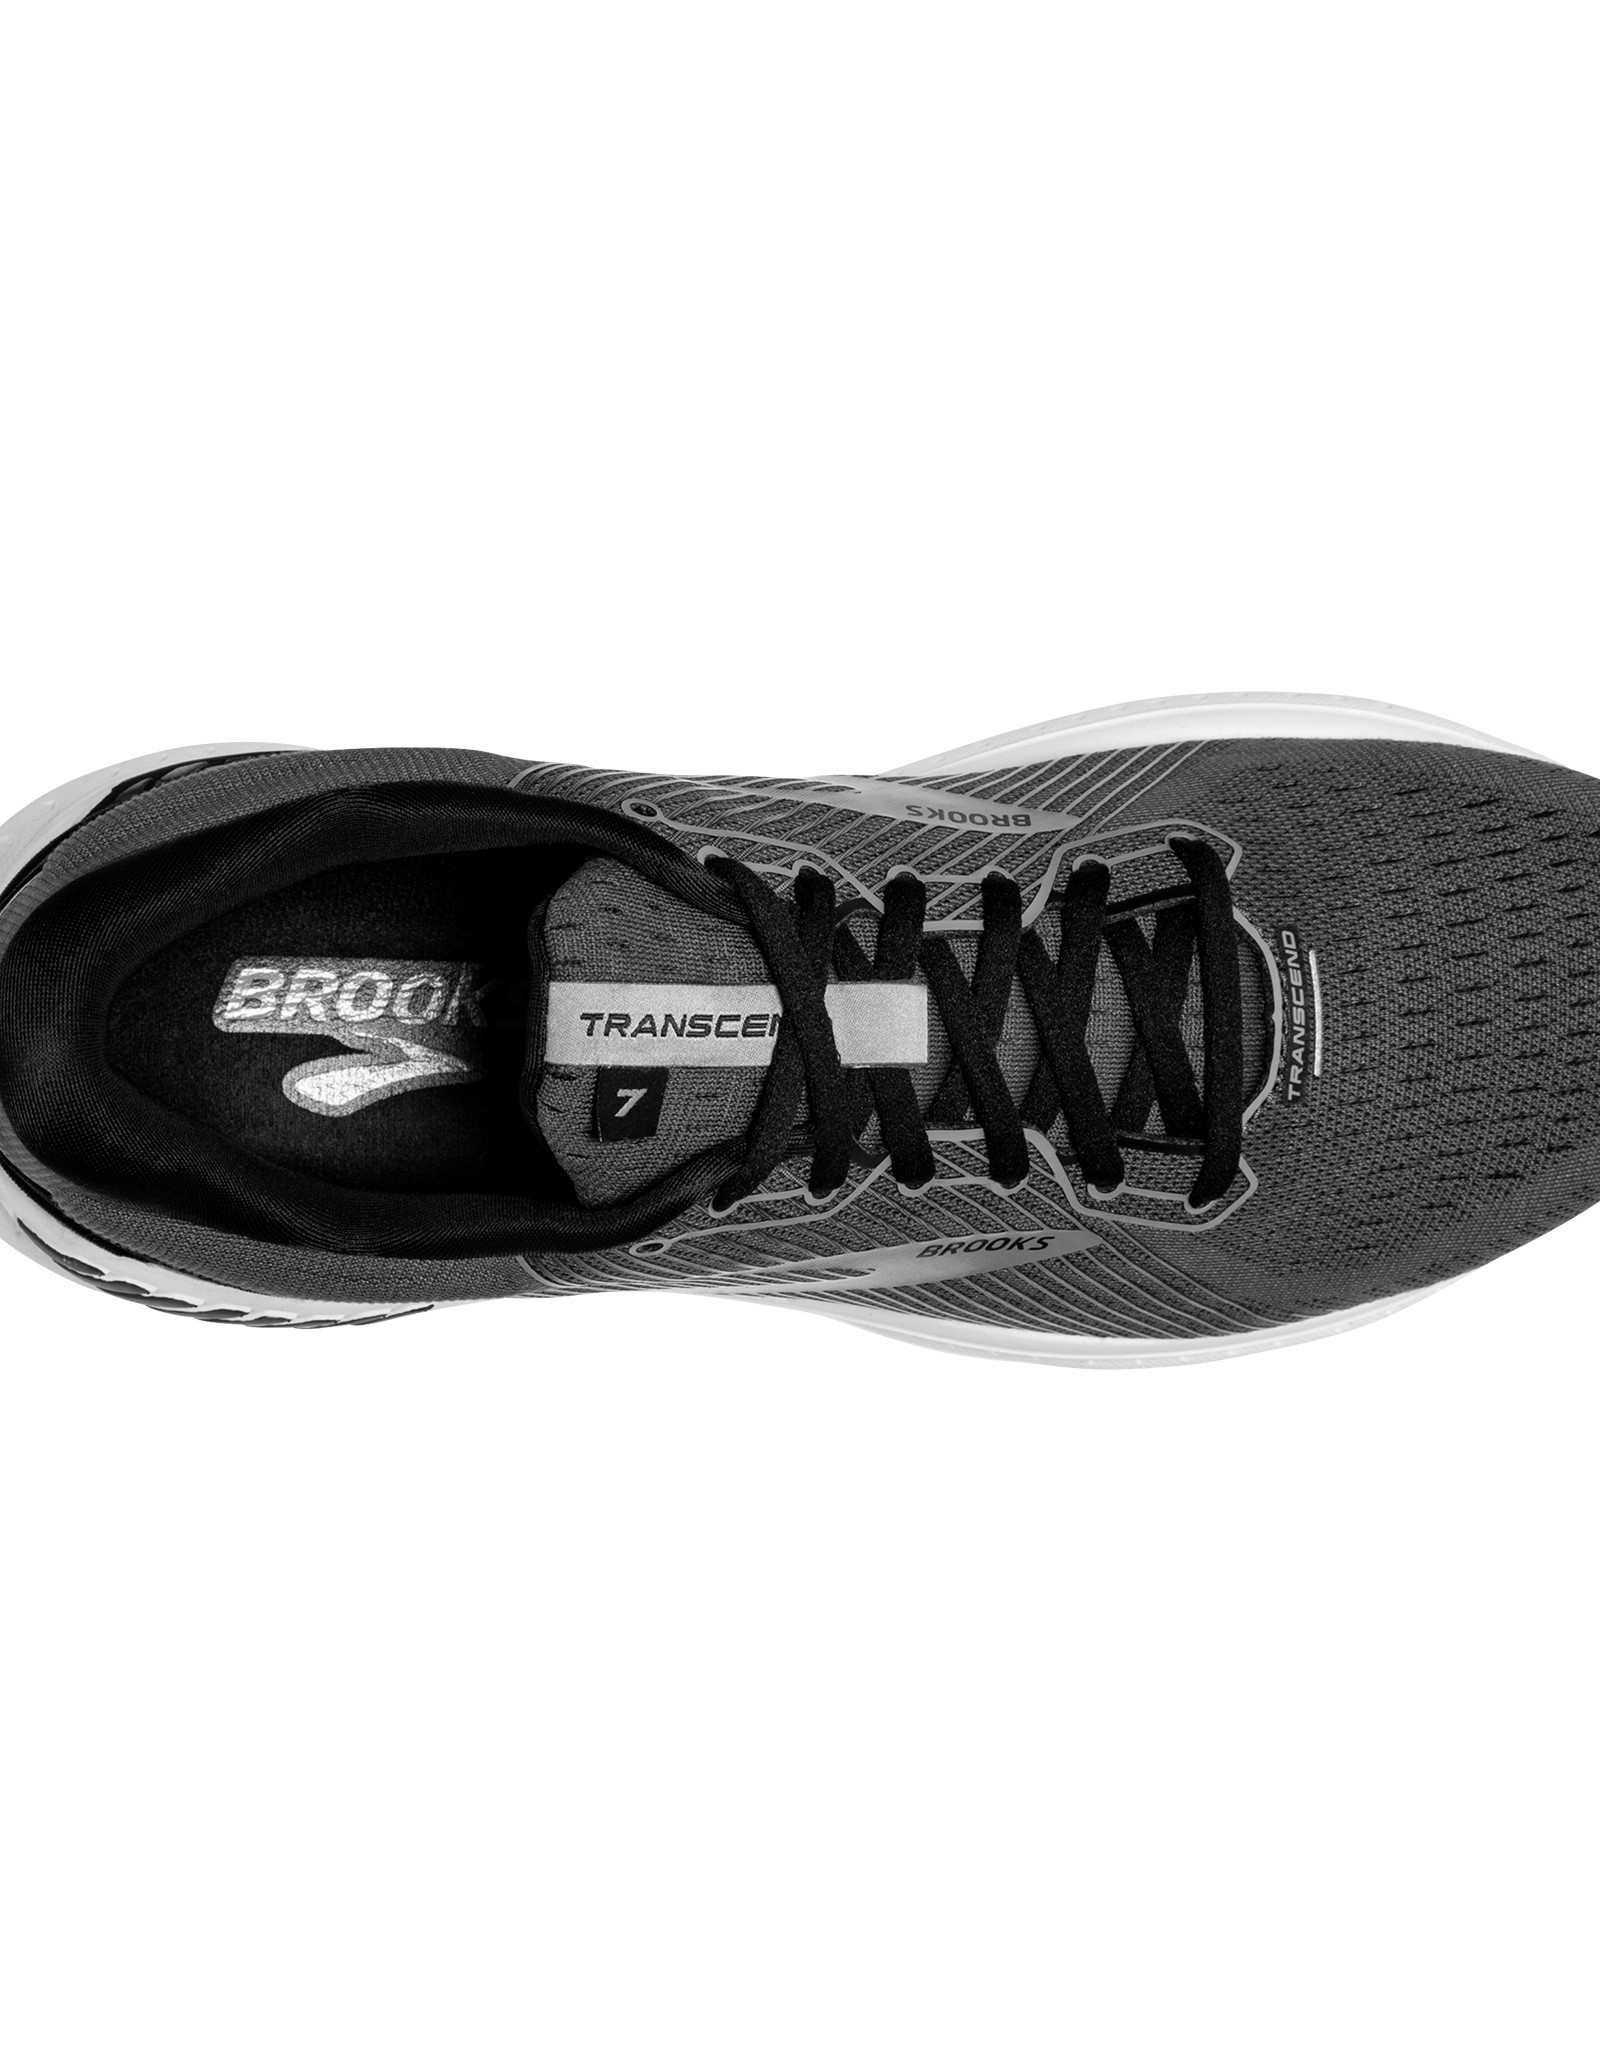 Brooks Transcend 7 Running Shoes